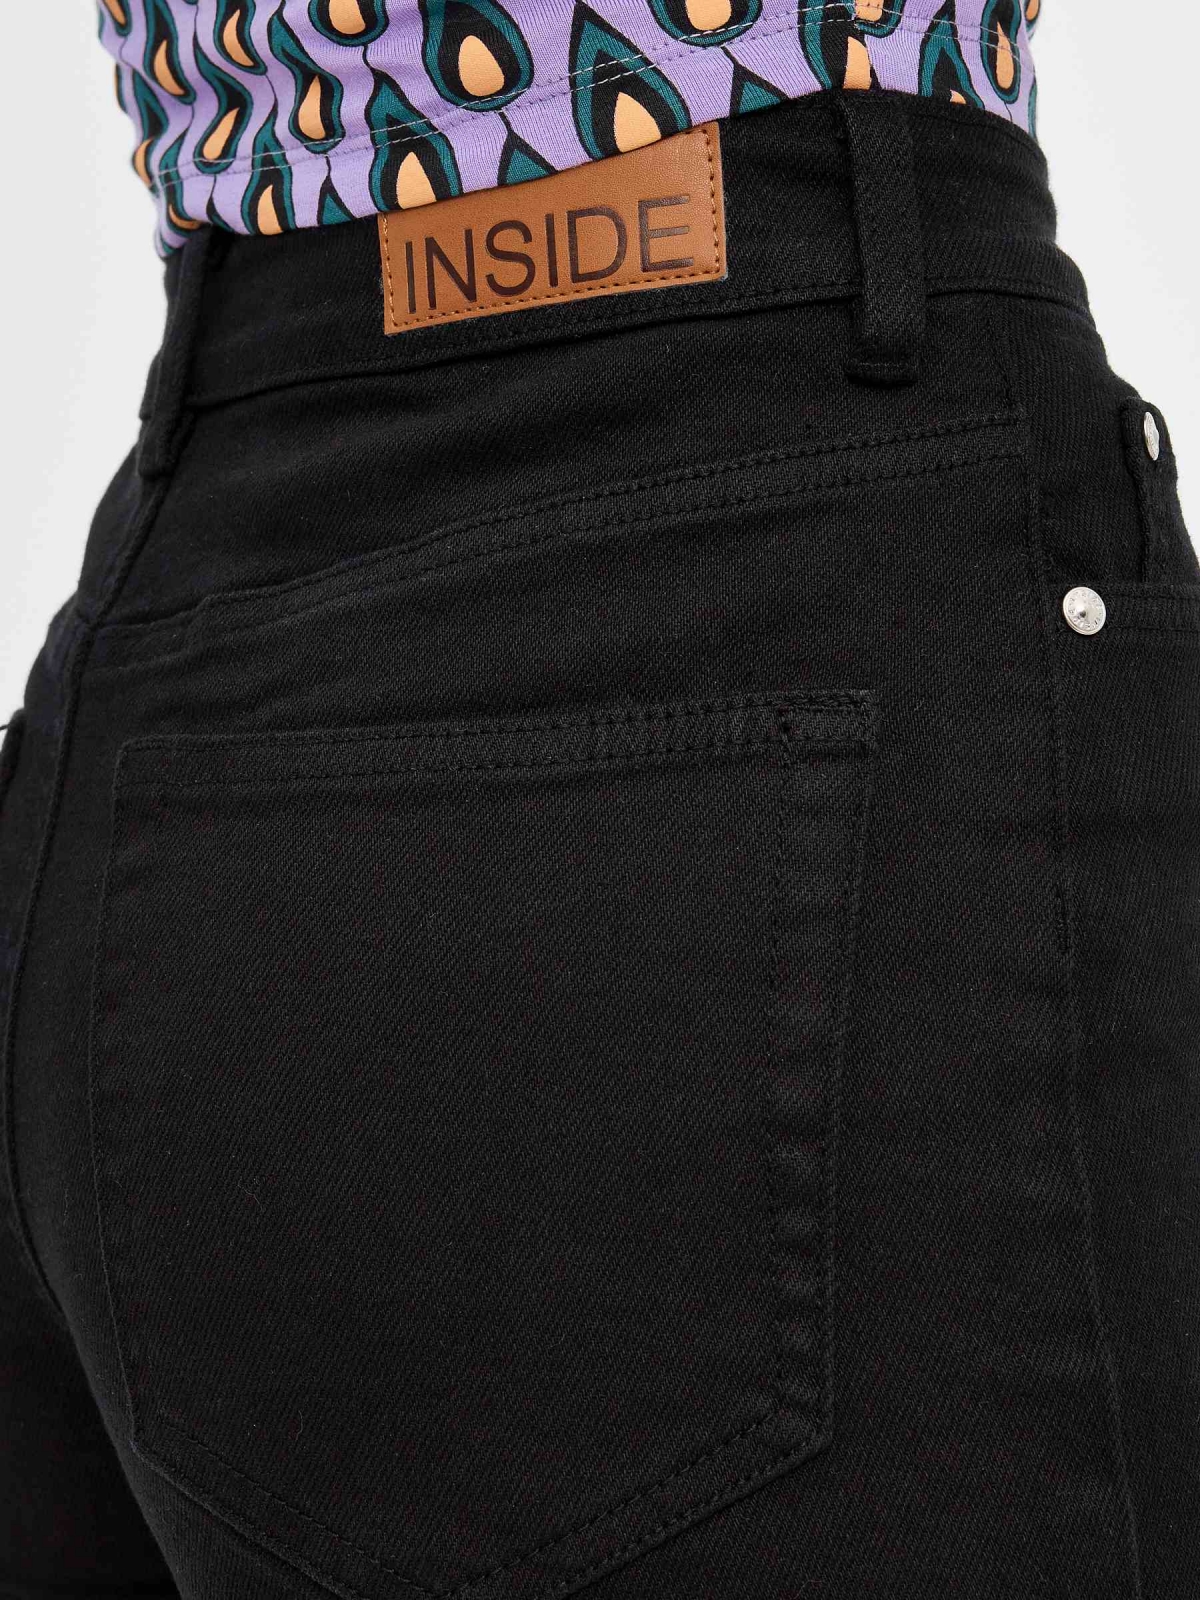 Shorts slim high rise black detail view